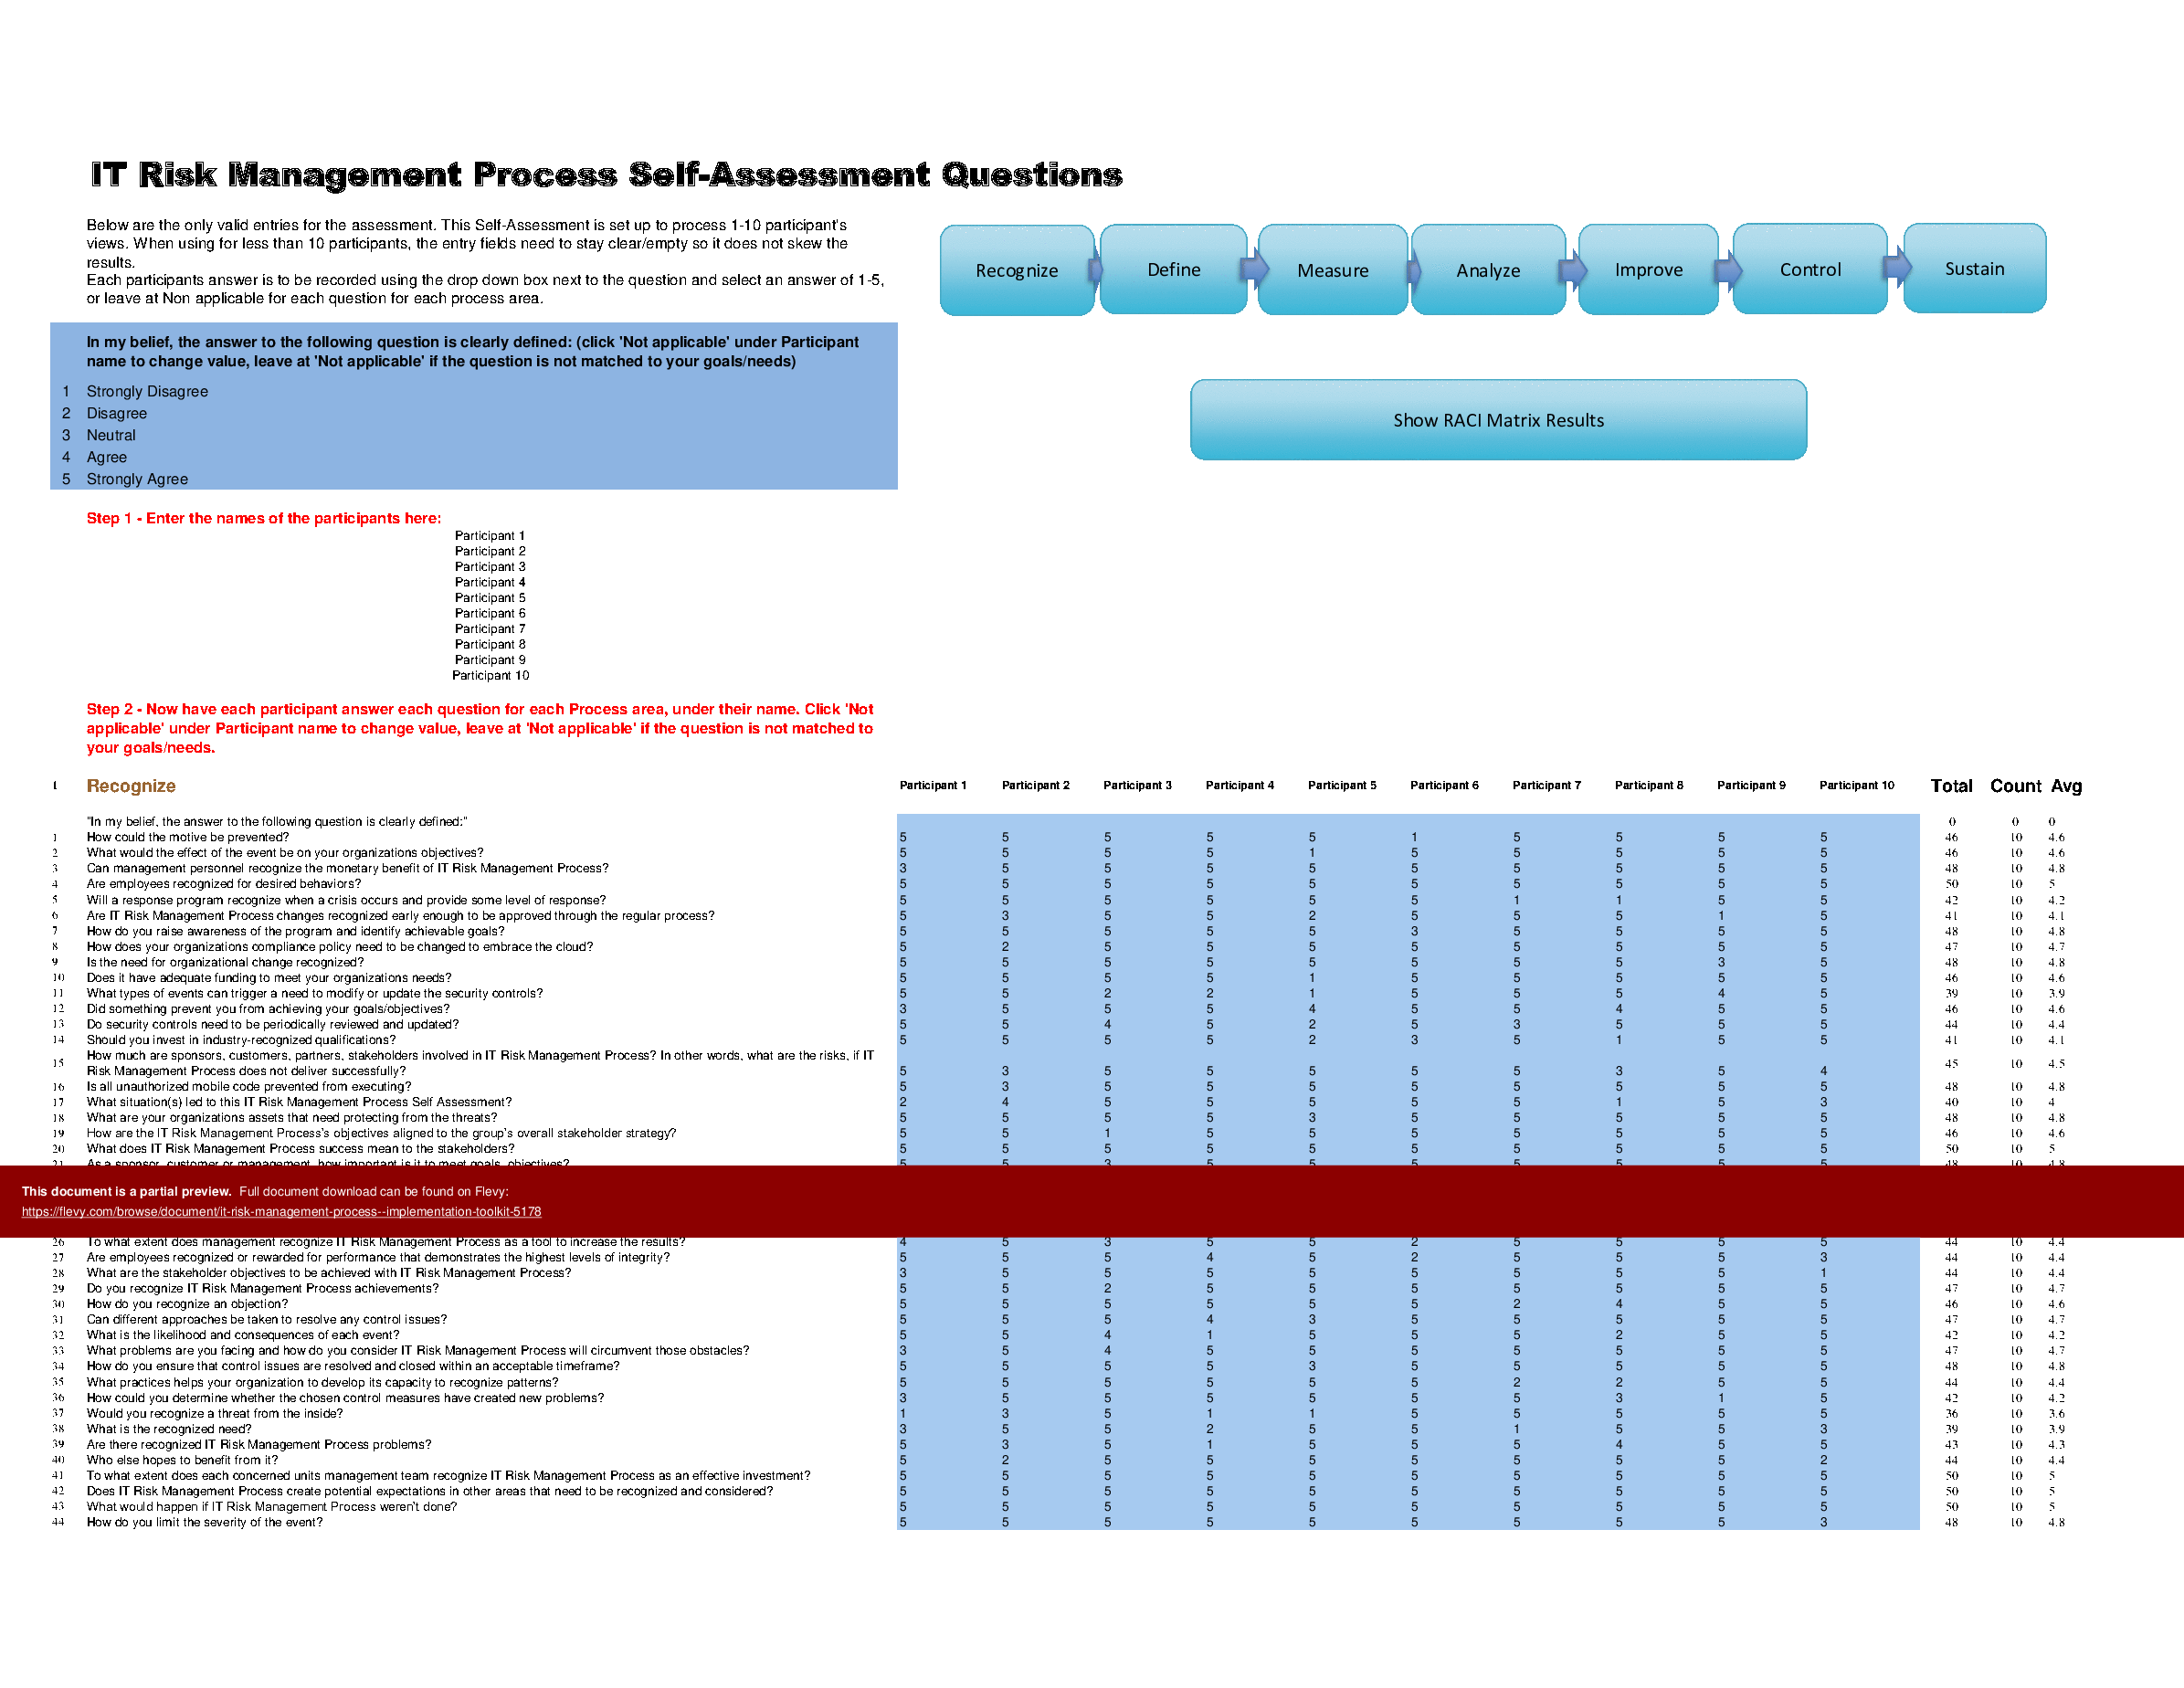 IT Risk Management Process - Implementation Toolkit (Excel template (XLSX)) Preview Image